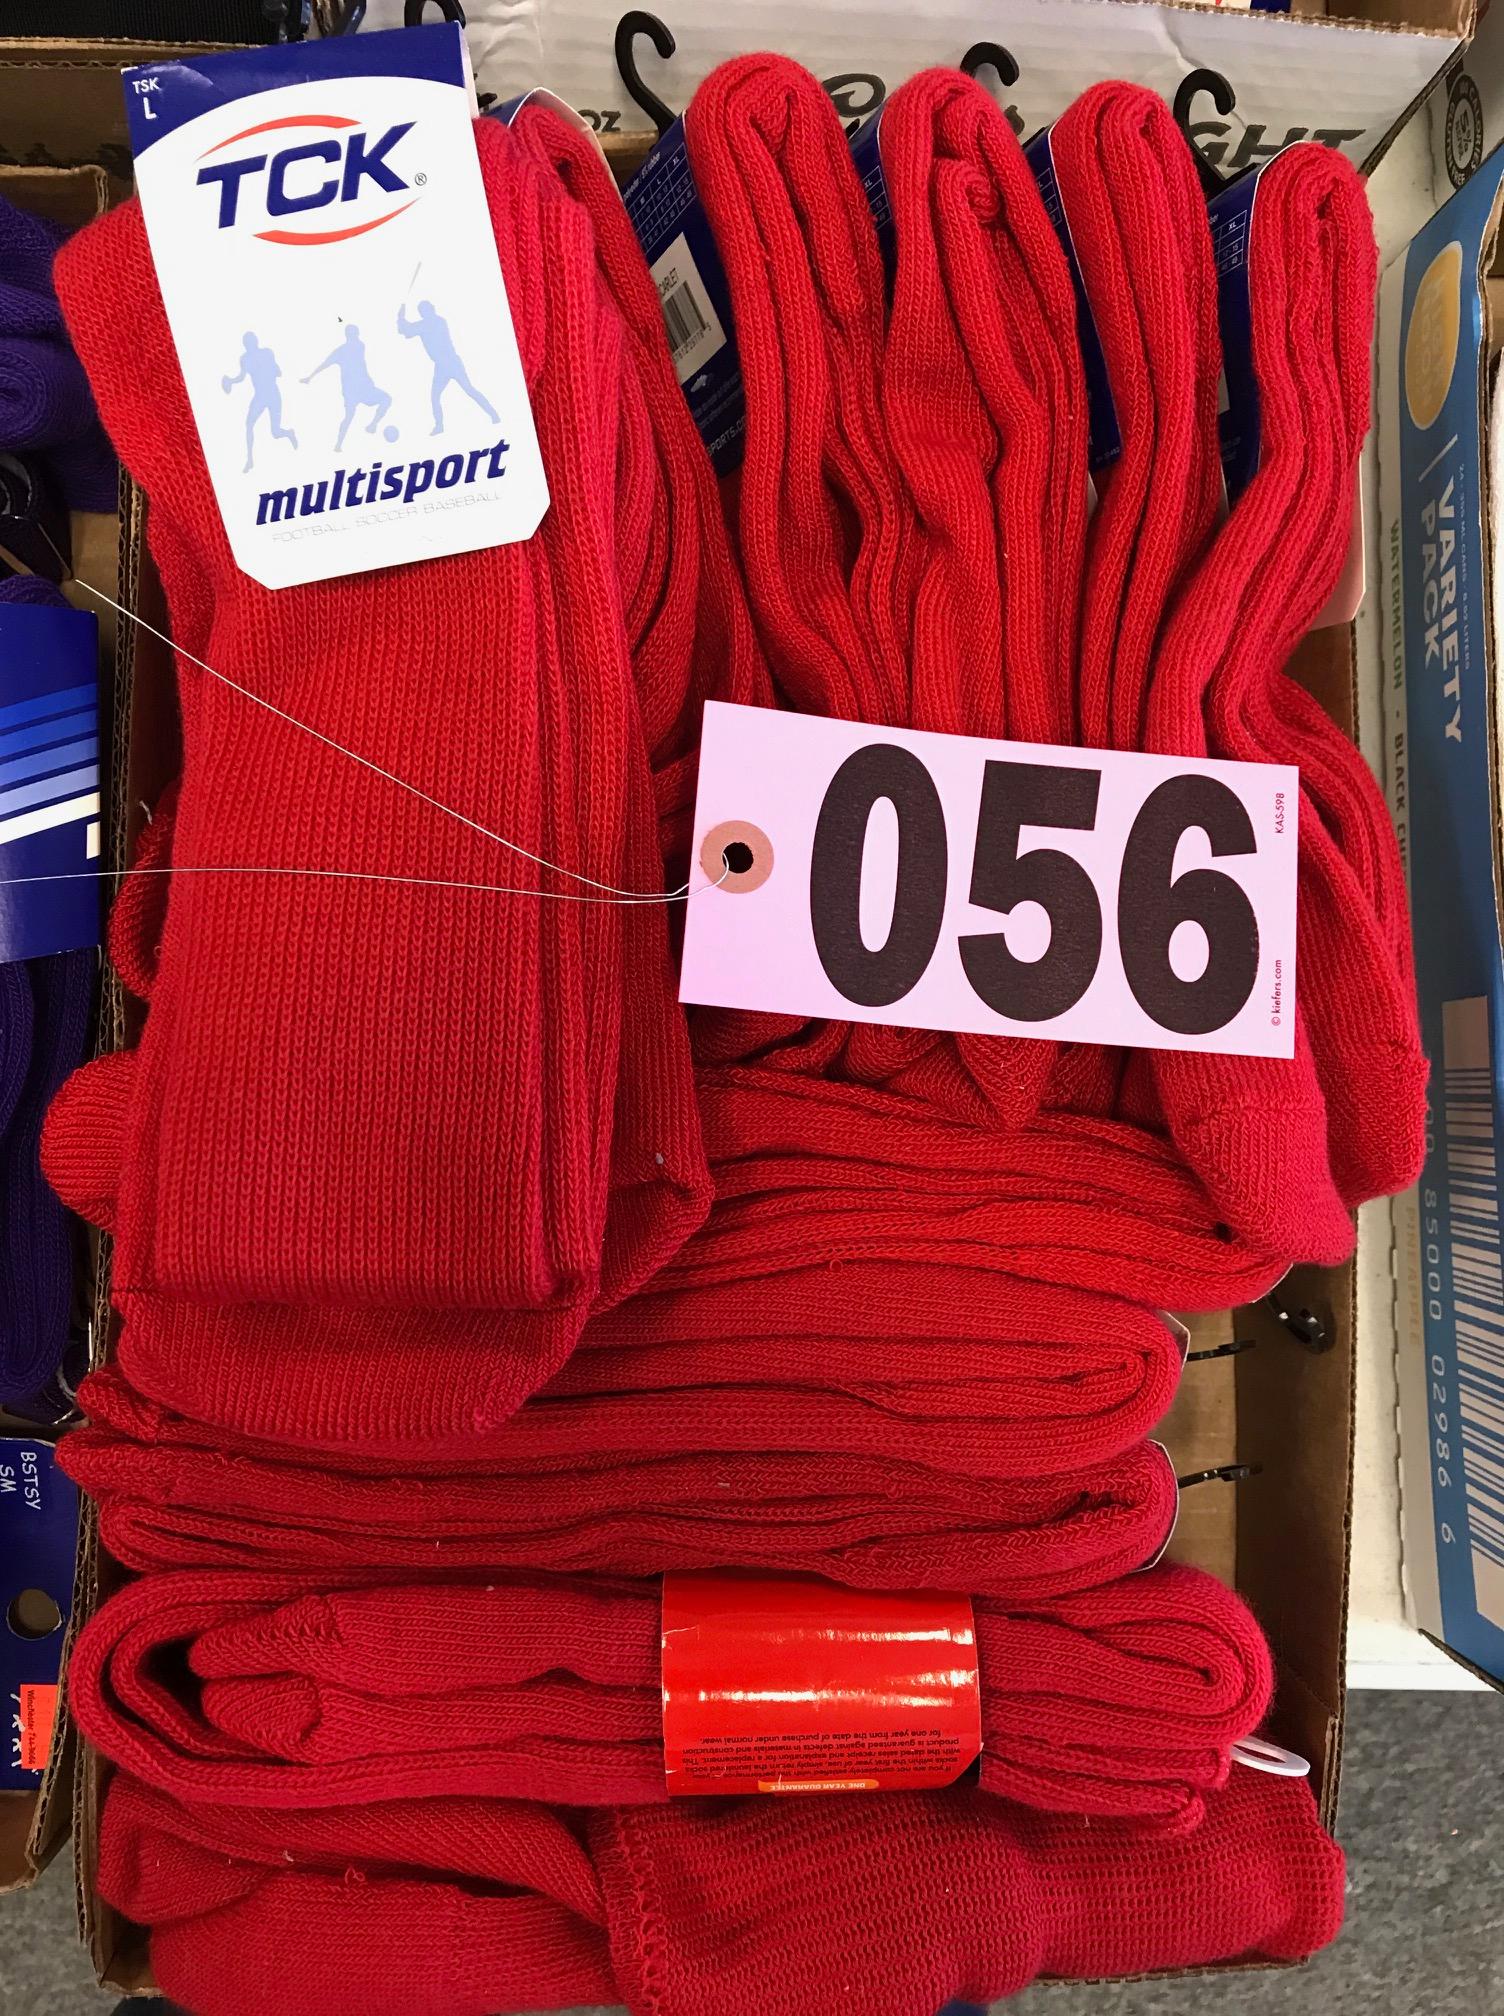 (12) Adult large red socks